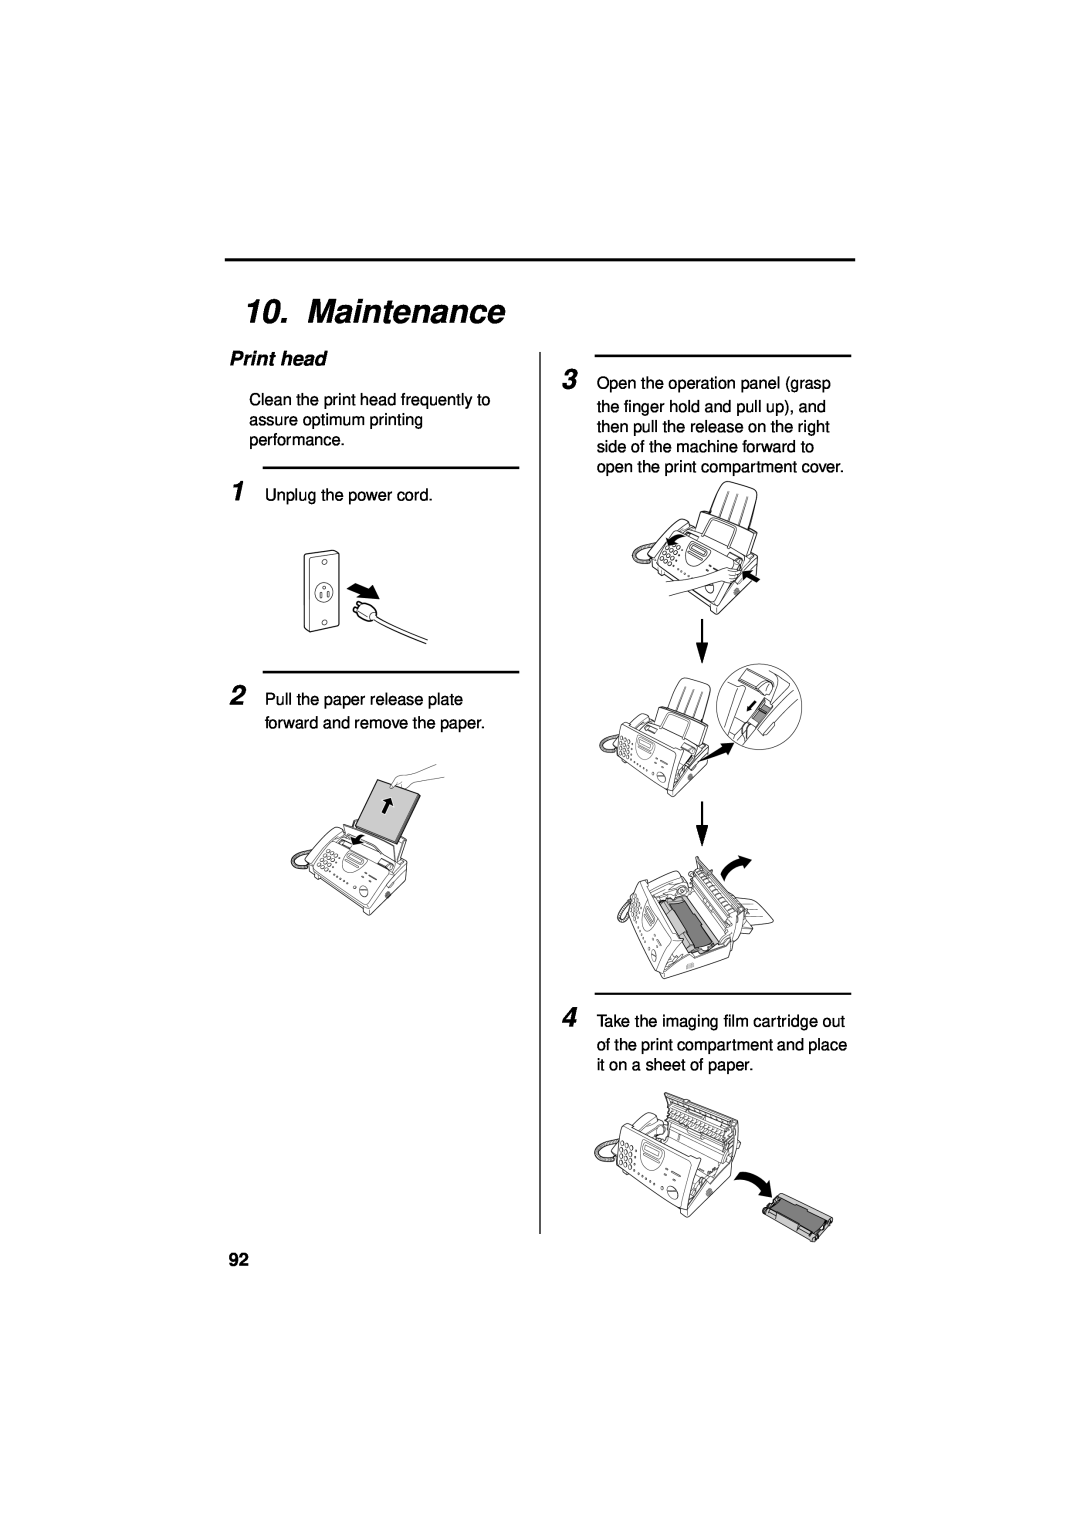 Sharp UX-340LM manual Maintenance, Print head 